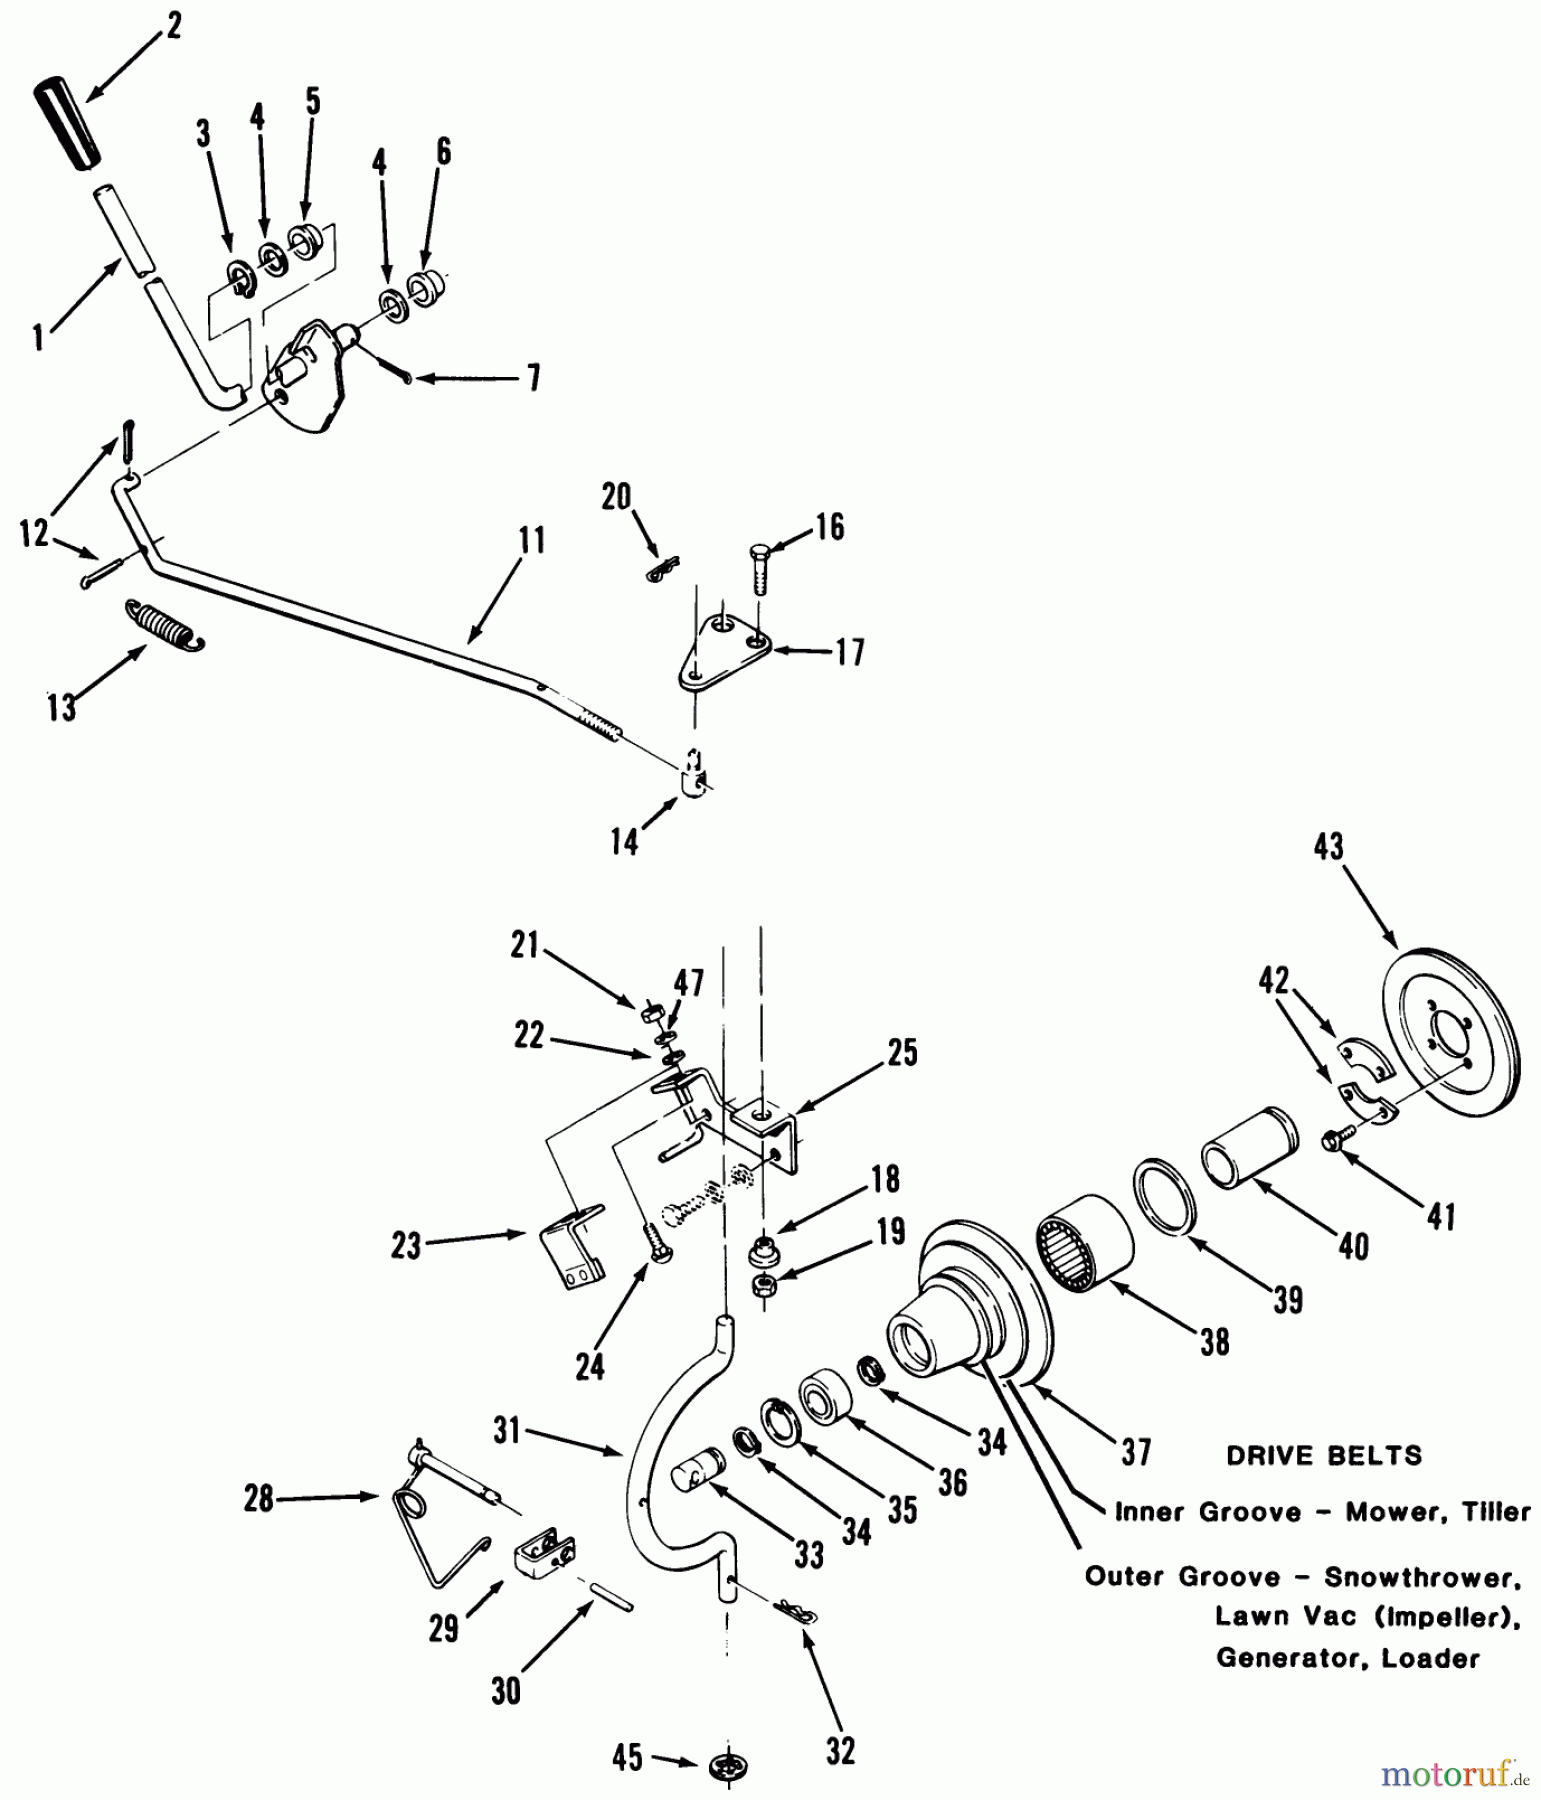  Toro Neu Mowers, Lawn & Garden Tractor Seite 1 41-20OE01 (520-H) - Toro 520-H Garden Tractor, 1990 PTO CLUTCH AND CONTROL